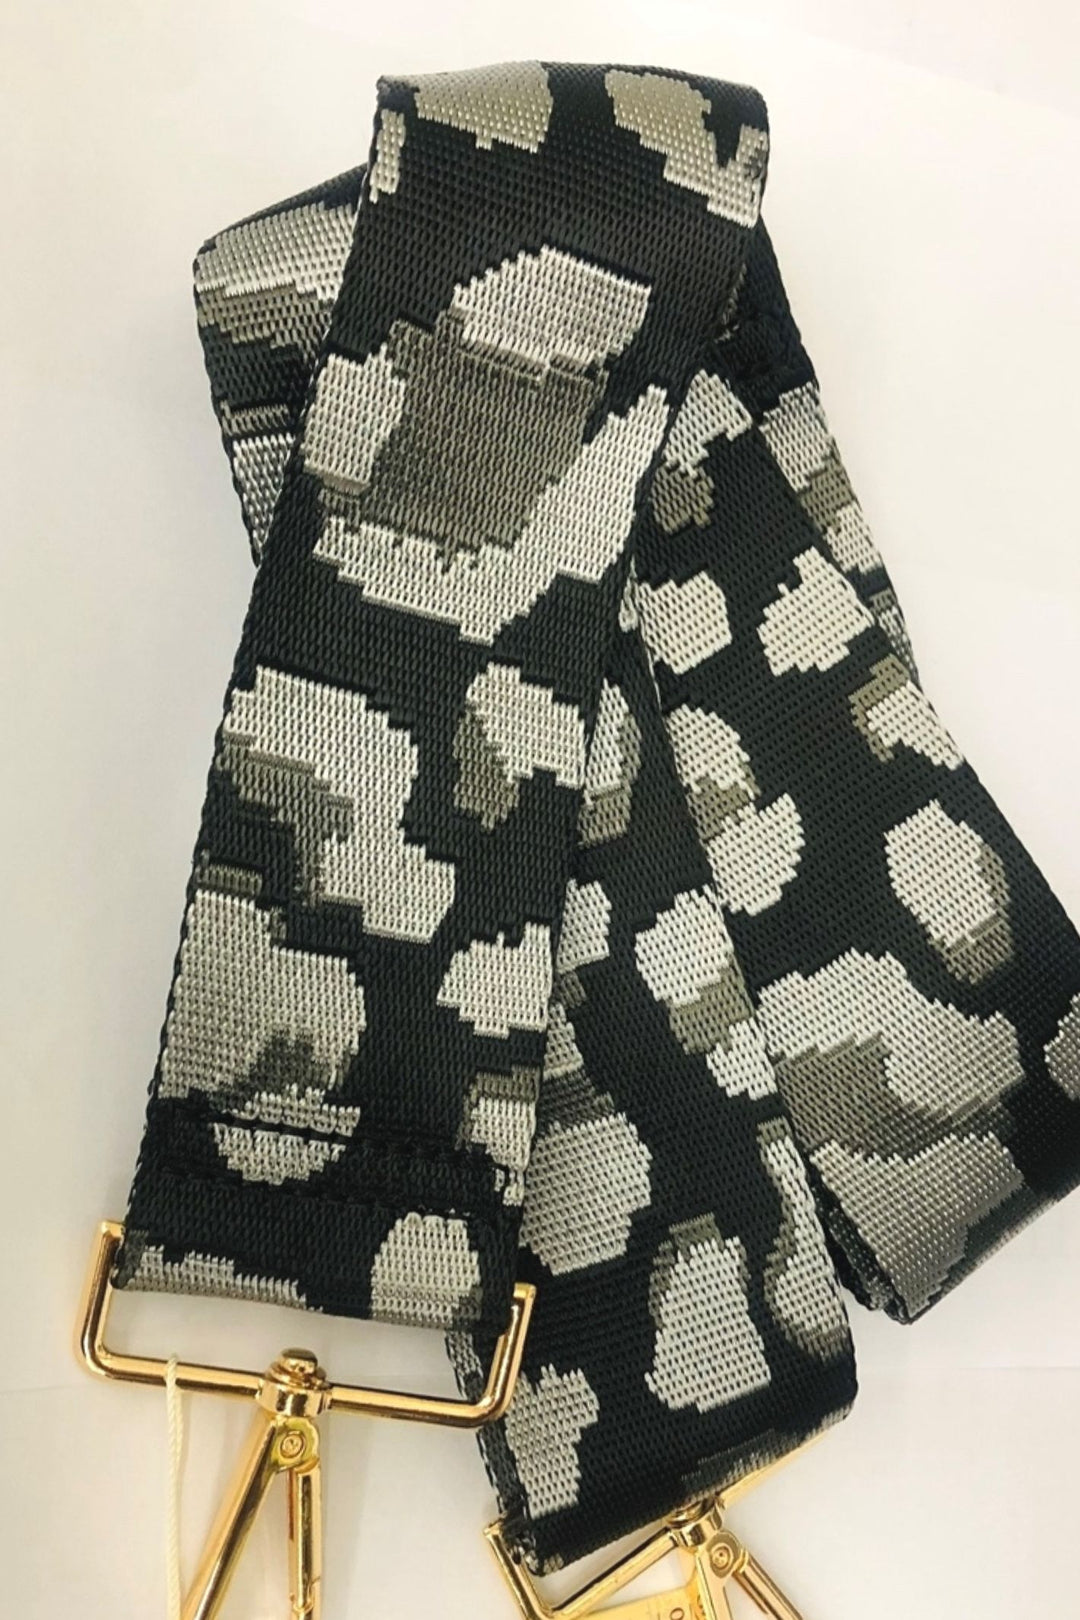 Leopard Print Interchangeable Bag Strap | Sugarplum Boutique Grey